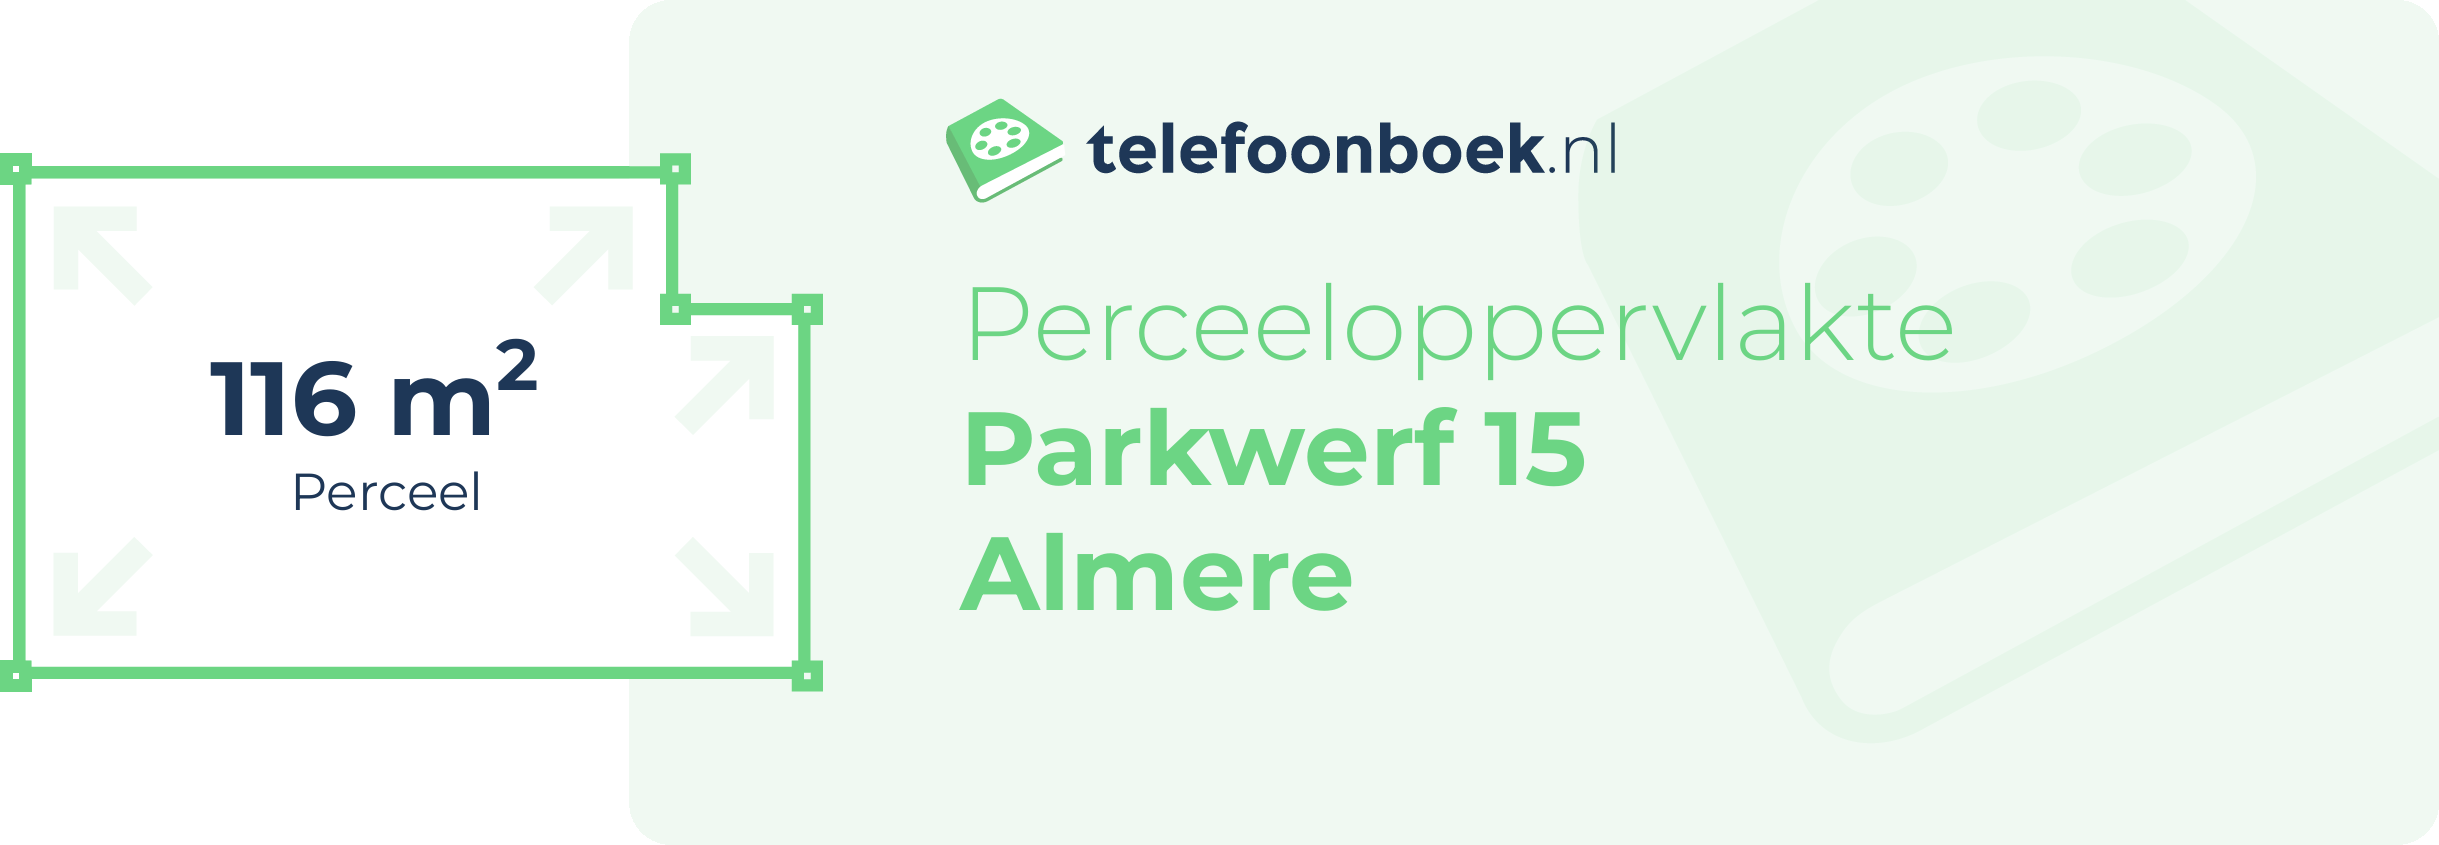 Perceeloppervlakte Parkwerf 15 Almere